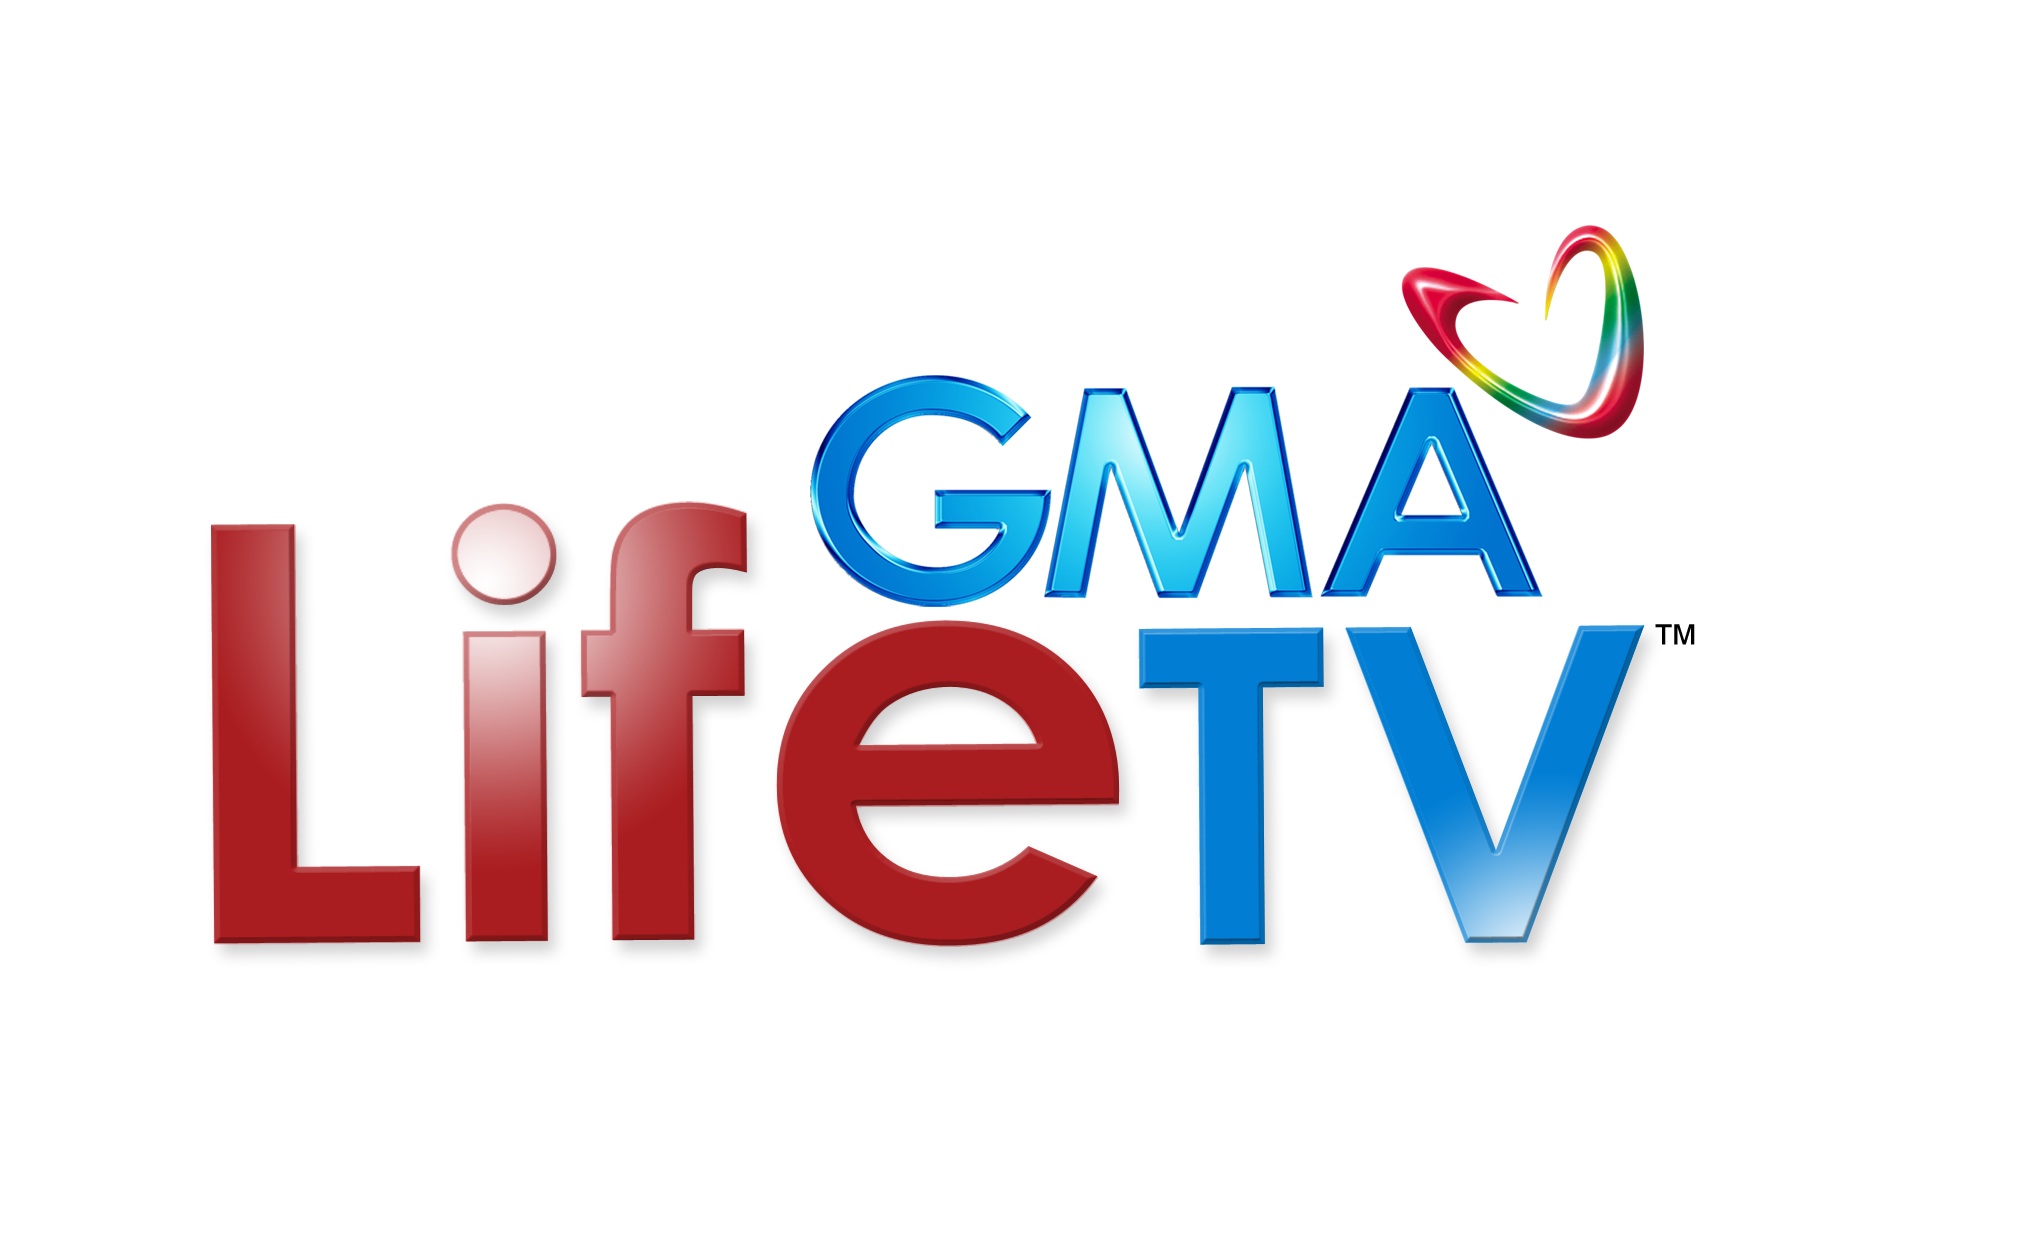 GMA Life TV